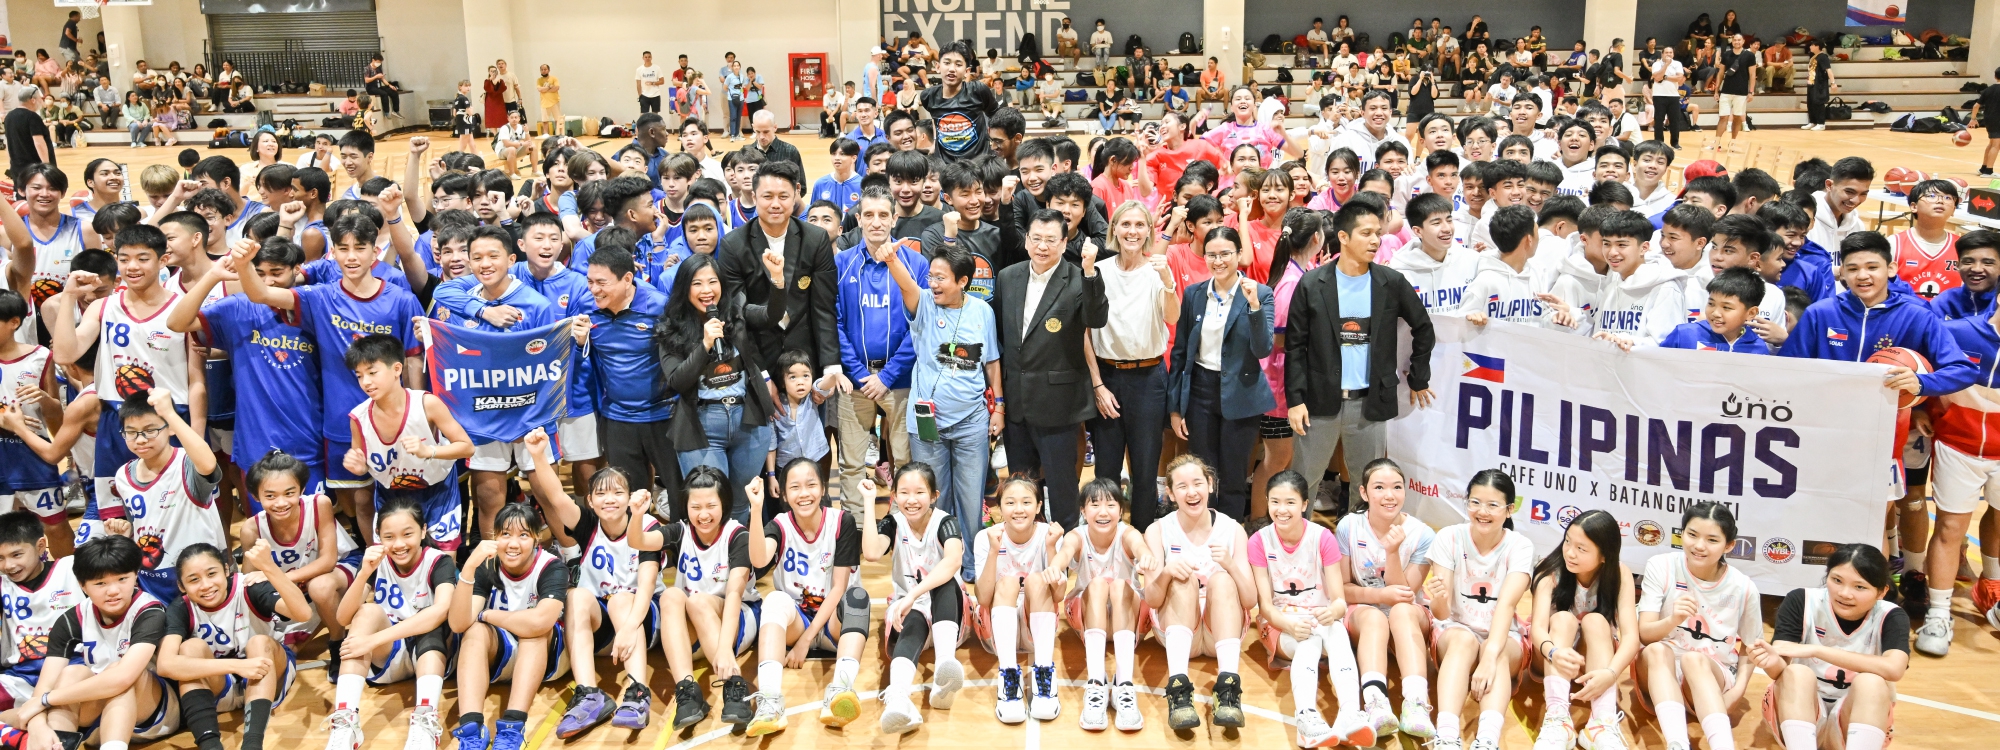 The first International Youth Basketball Championship 2023 in Thailand at King’s Bangkok